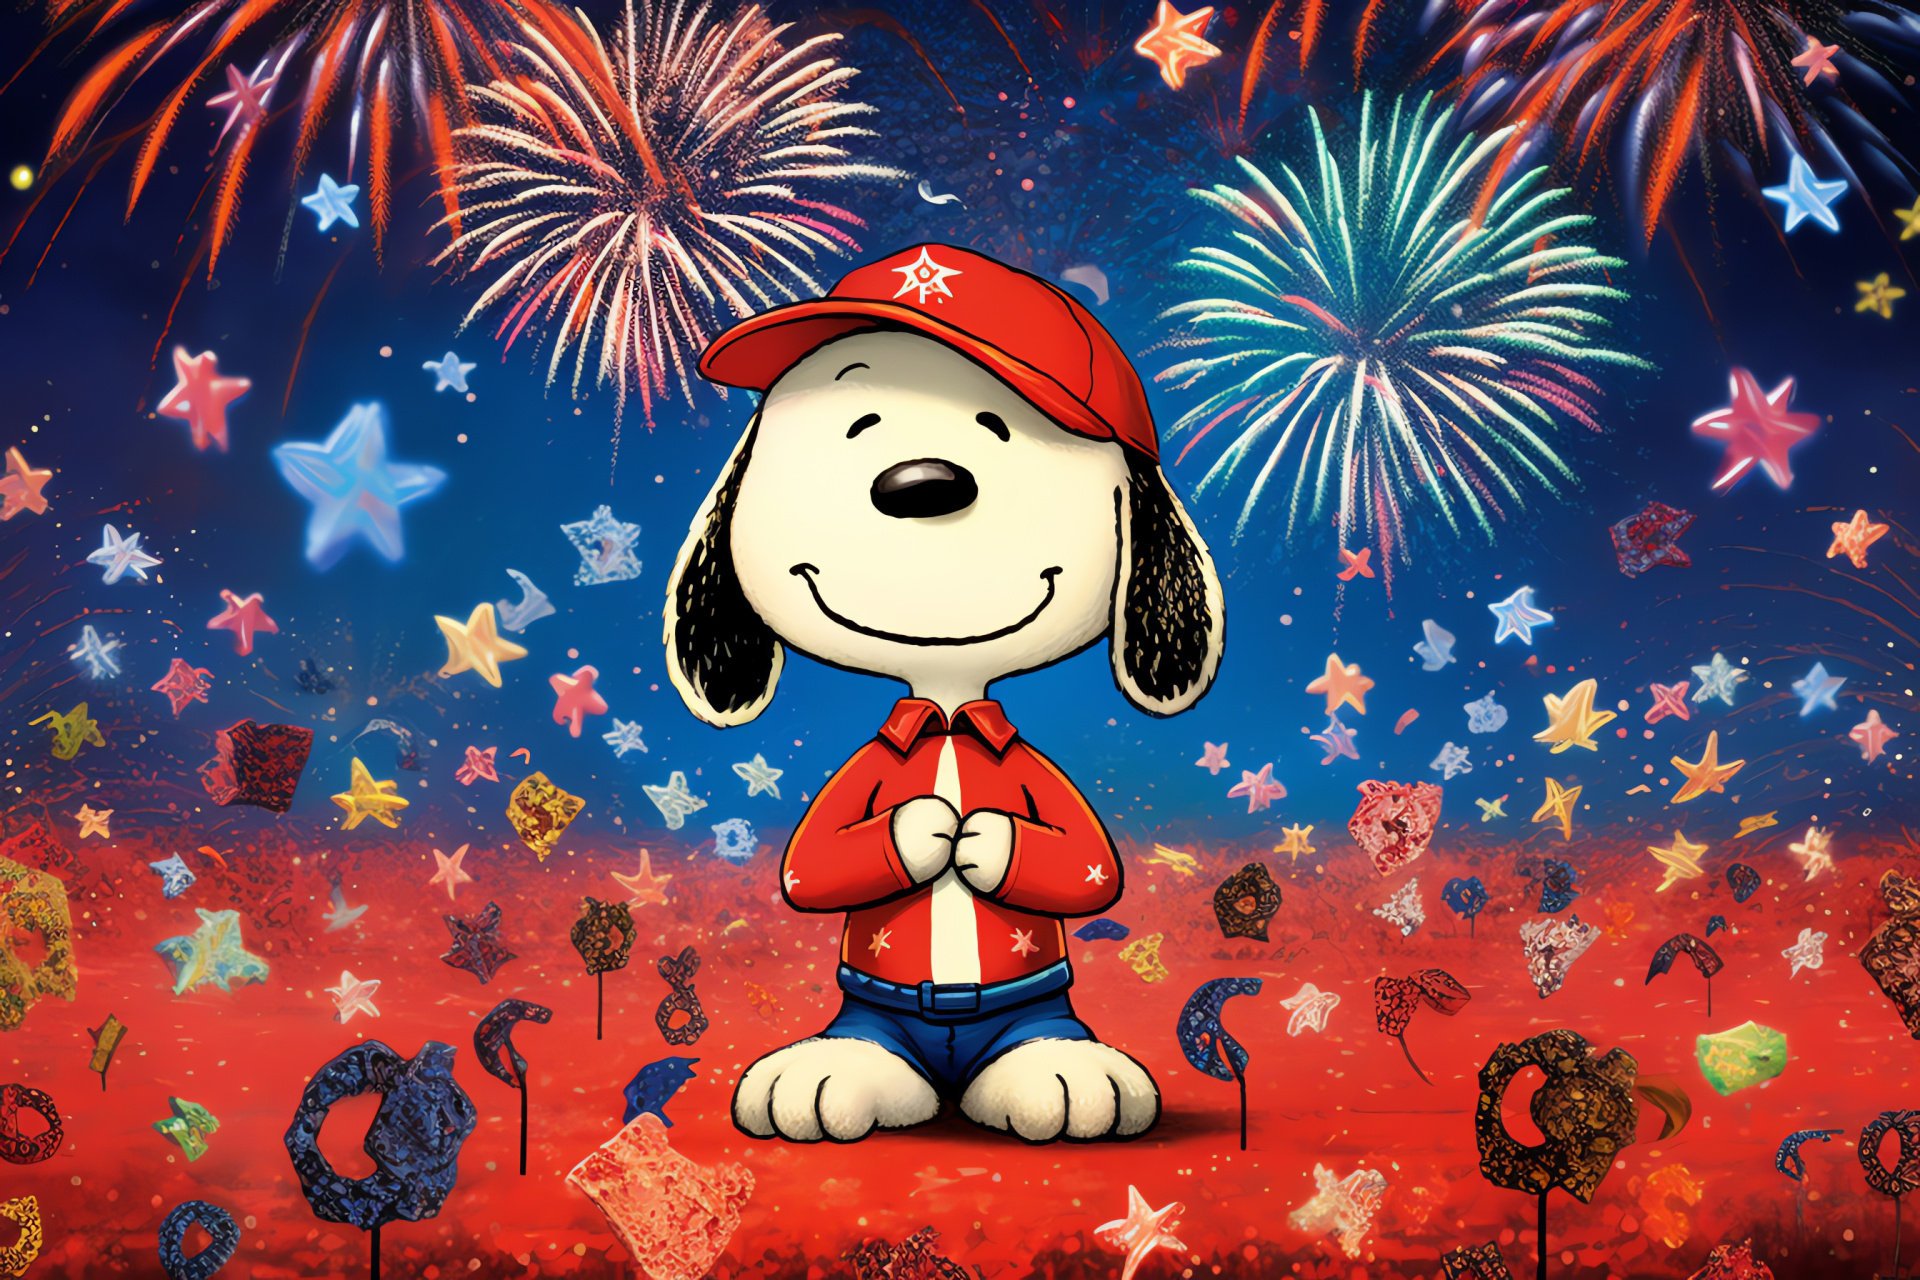 Freedom celebration beagle, National pyrotechnics, Patriotism in sky, Crimson and azure display, Sparkling exhibition, HD Desktop Image